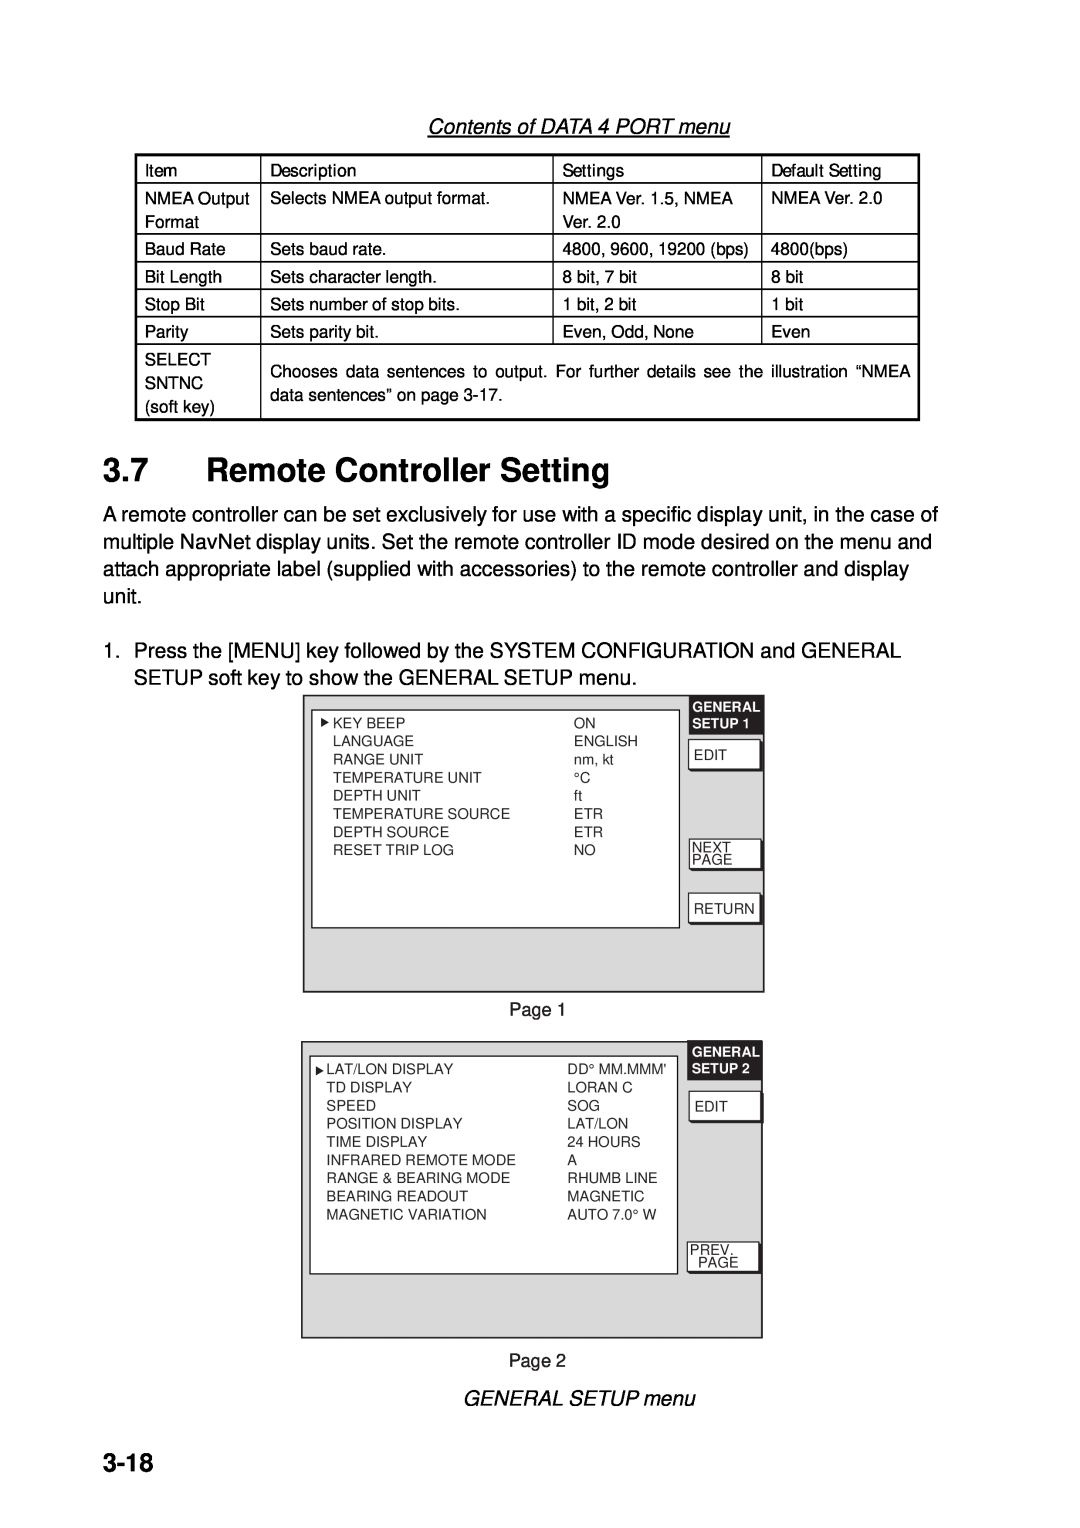 Furuno 1833C, 1933C, 1943C, 1823C, GD-1900C Remote Controller Setting, 3-18, Contents of DATA 4 PORT menu, GENERAL SETUP menu 